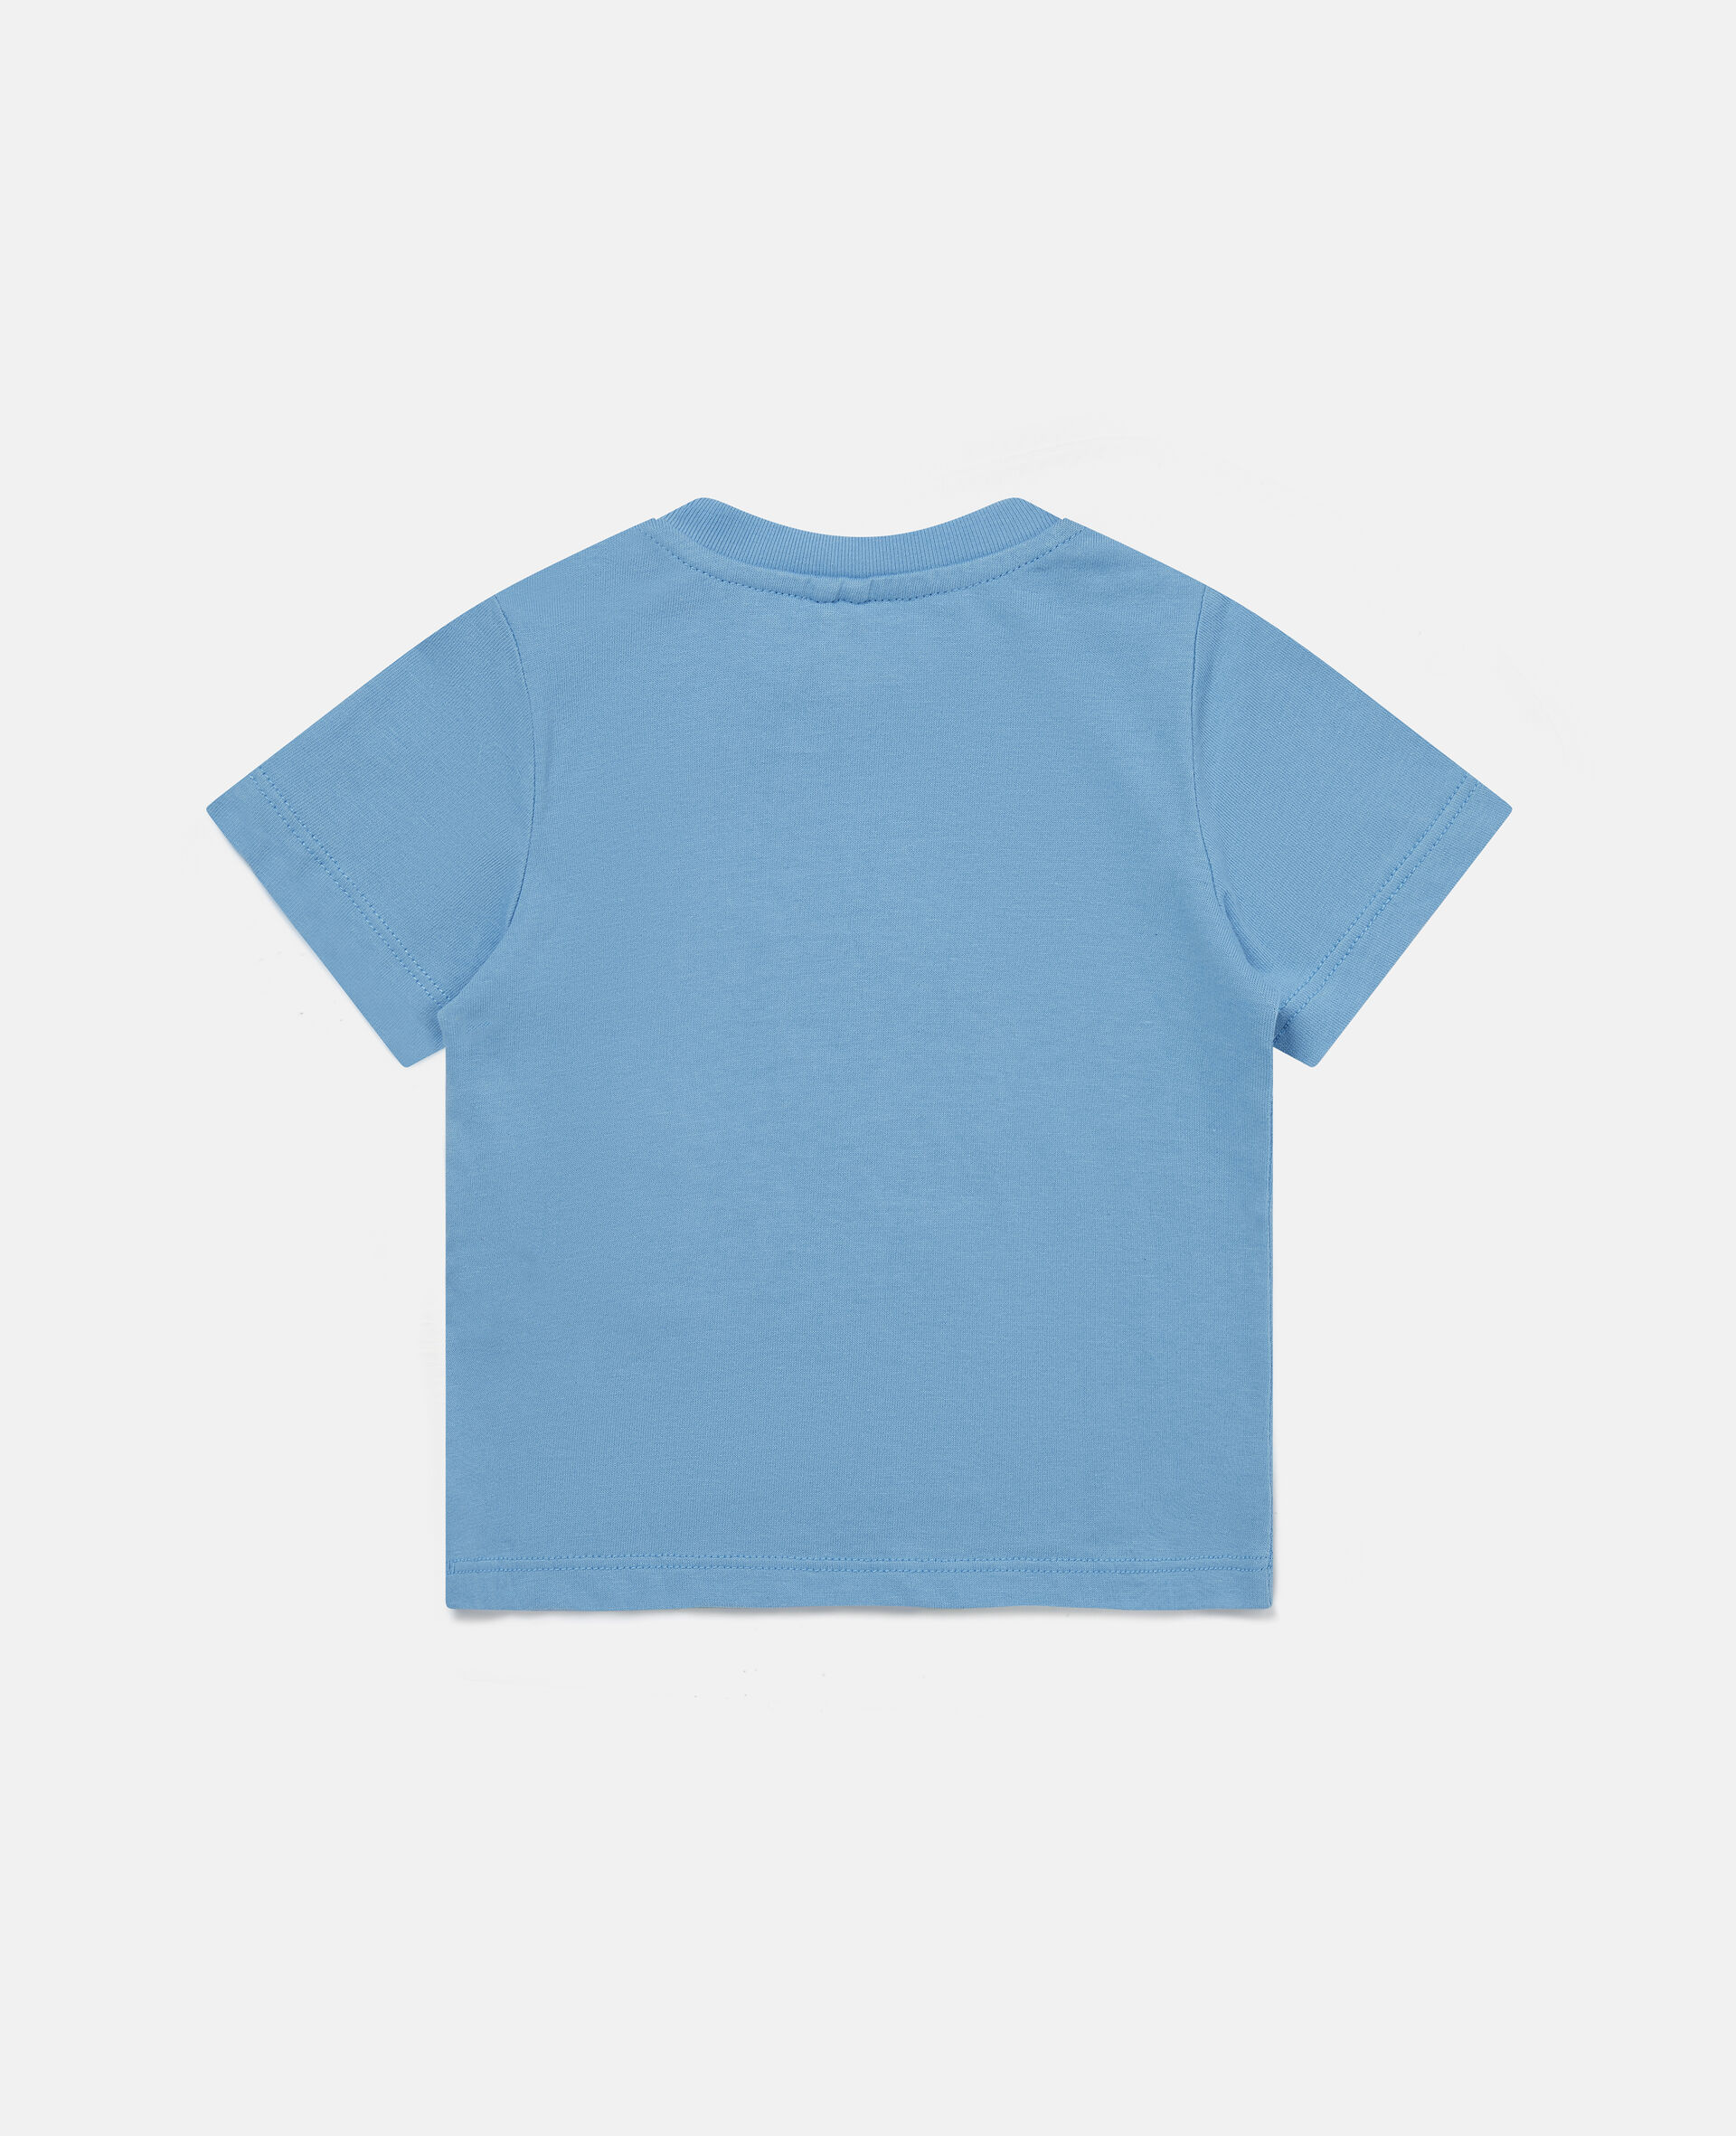 Cactus Print Cotton T-Shirt-Blue-large image number 2